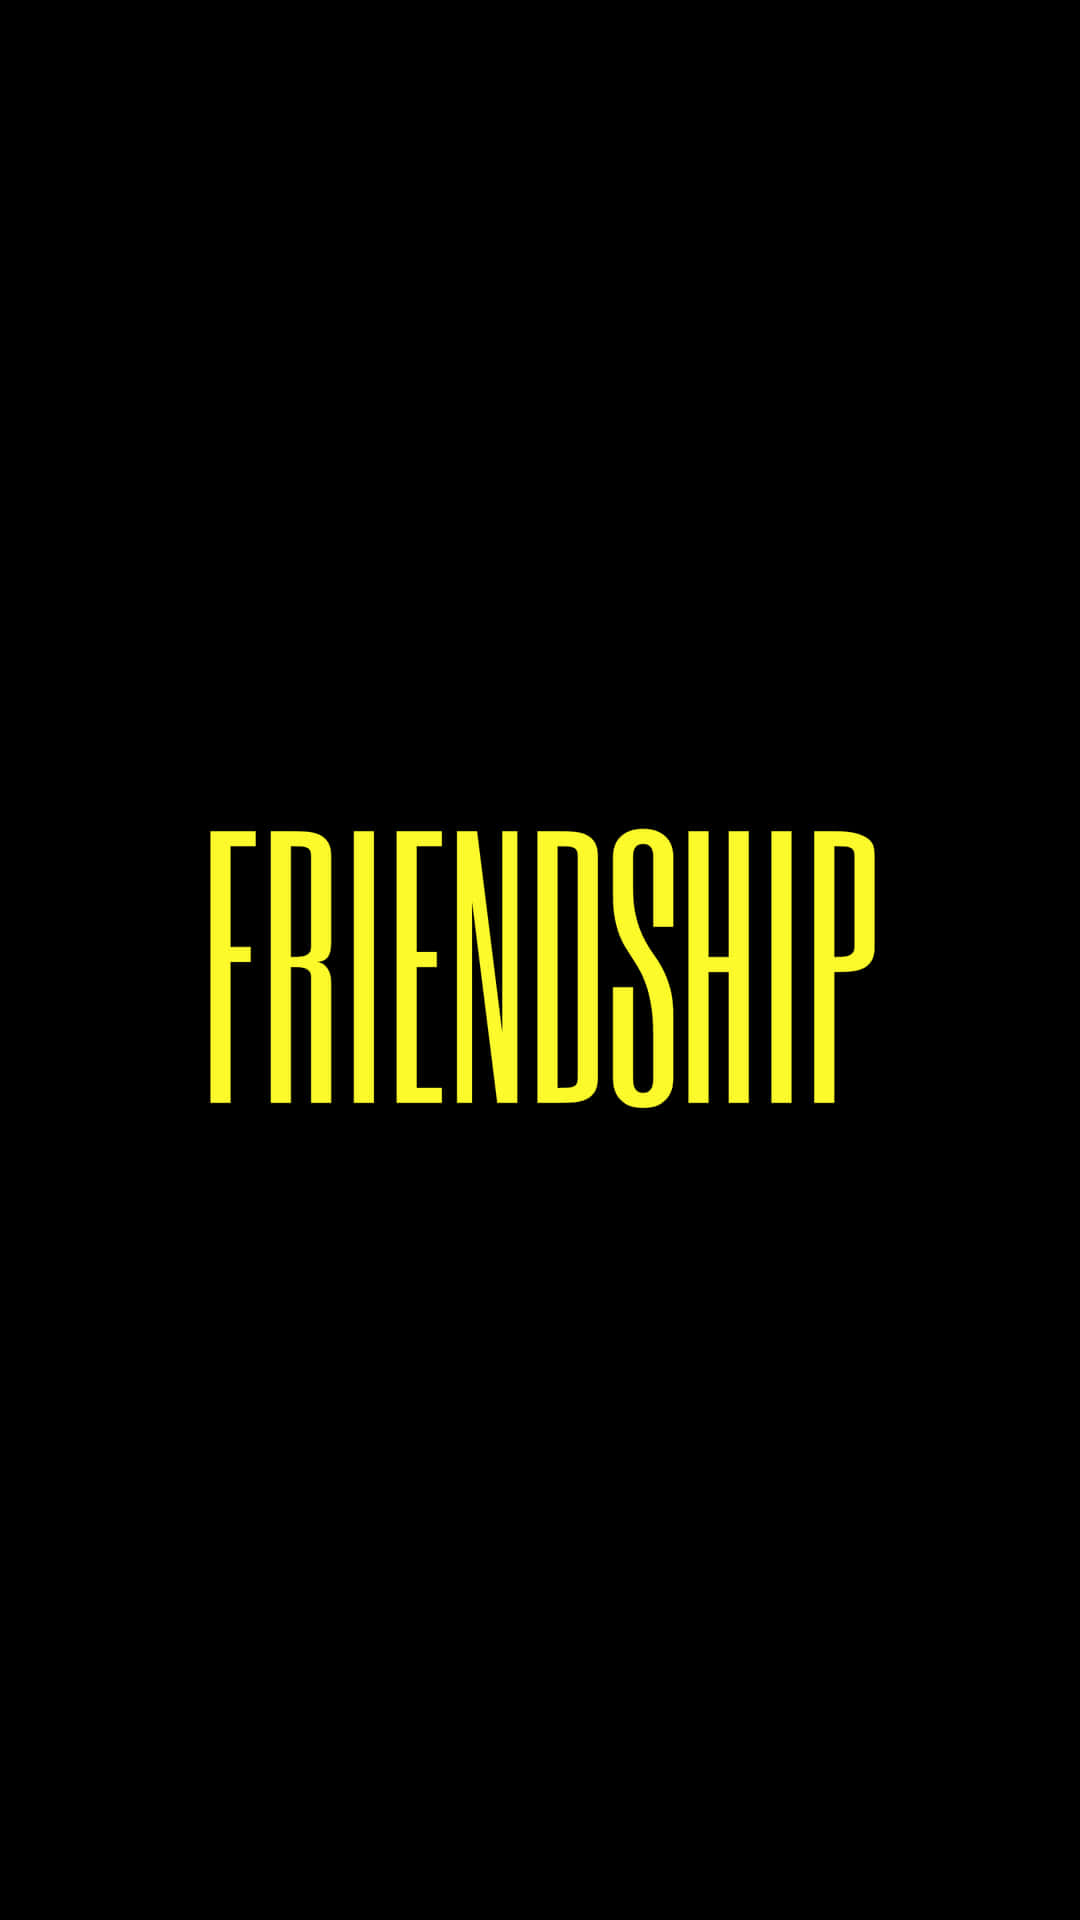 Friendly Friendship Wallpaper